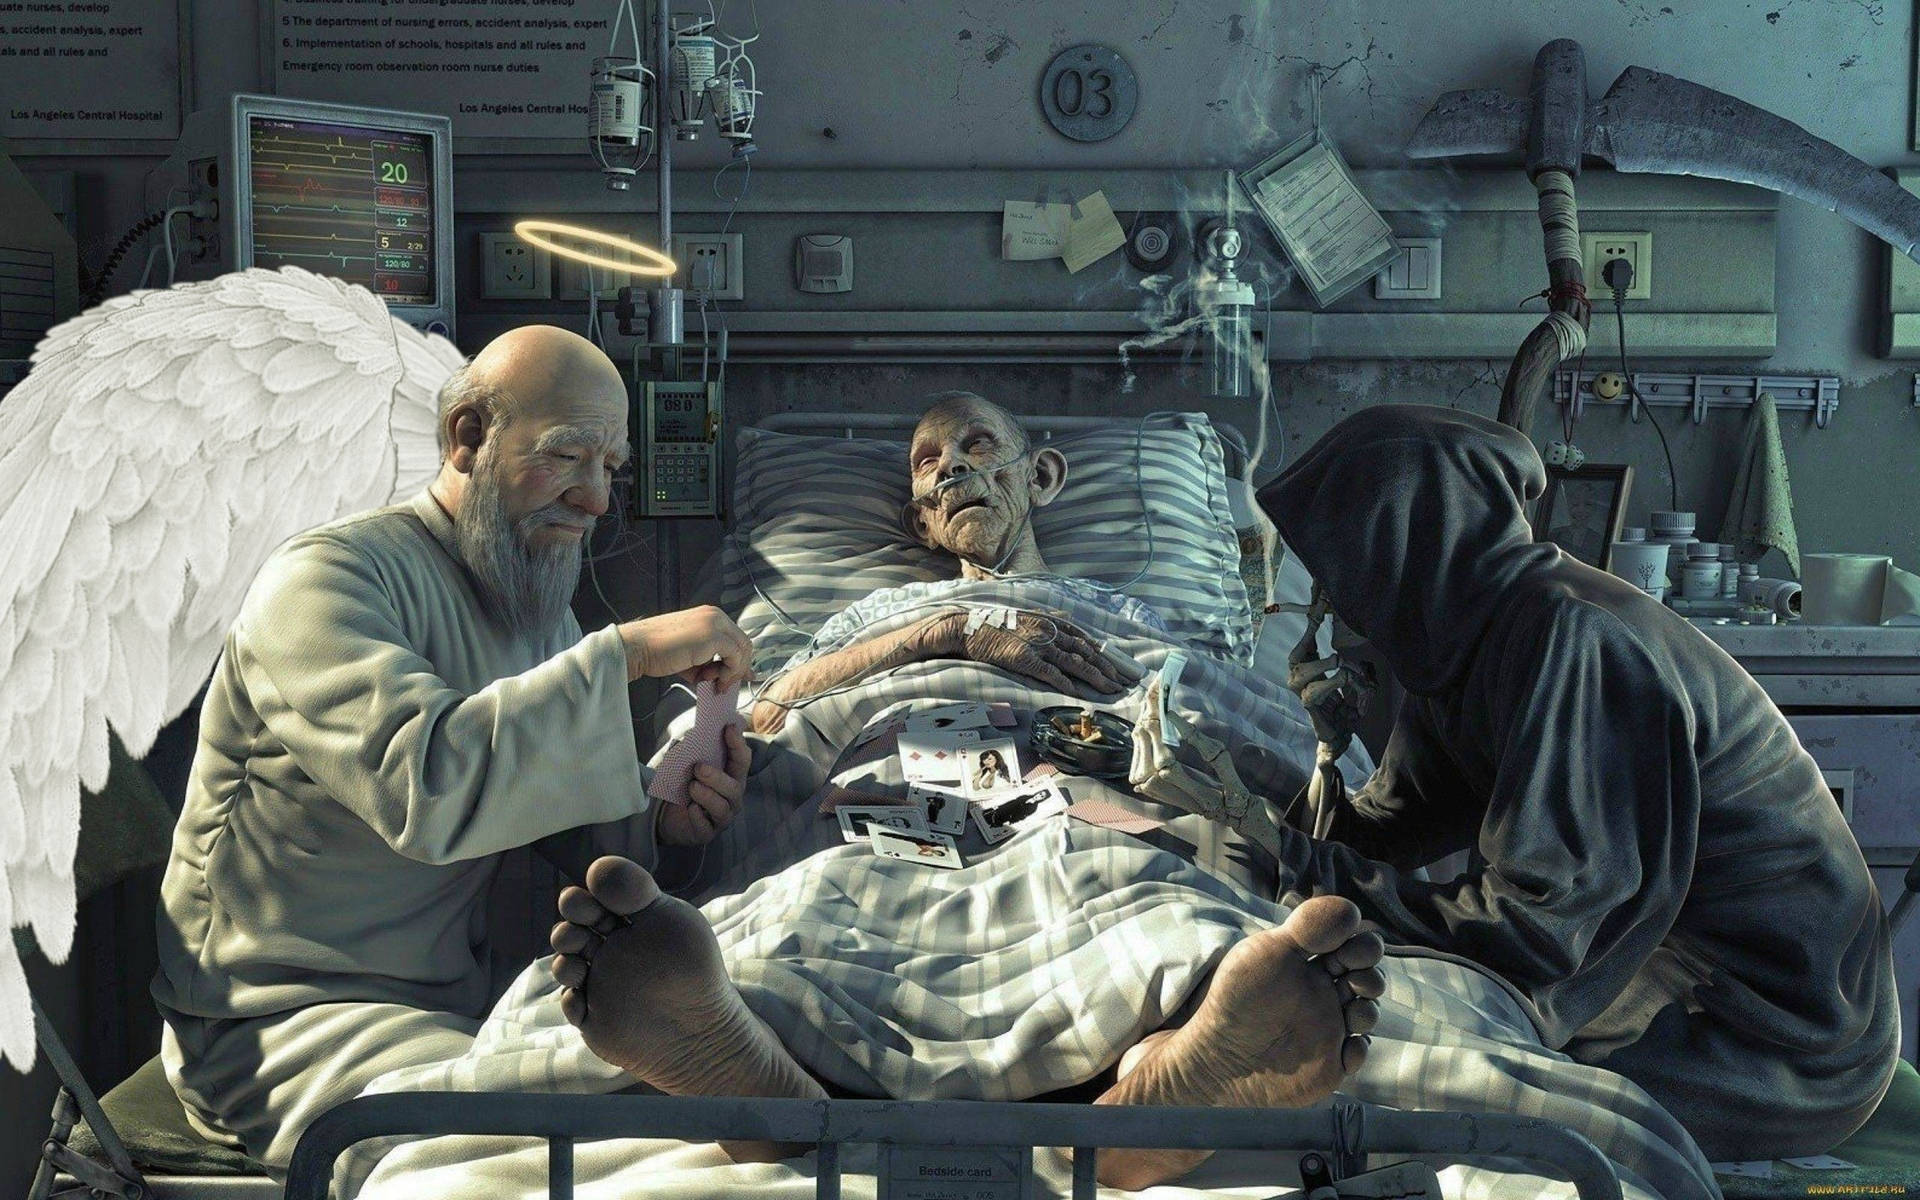 Caption: "Eerie Deathbed Scene in 3D Horror Aesthetics" Wallpaper